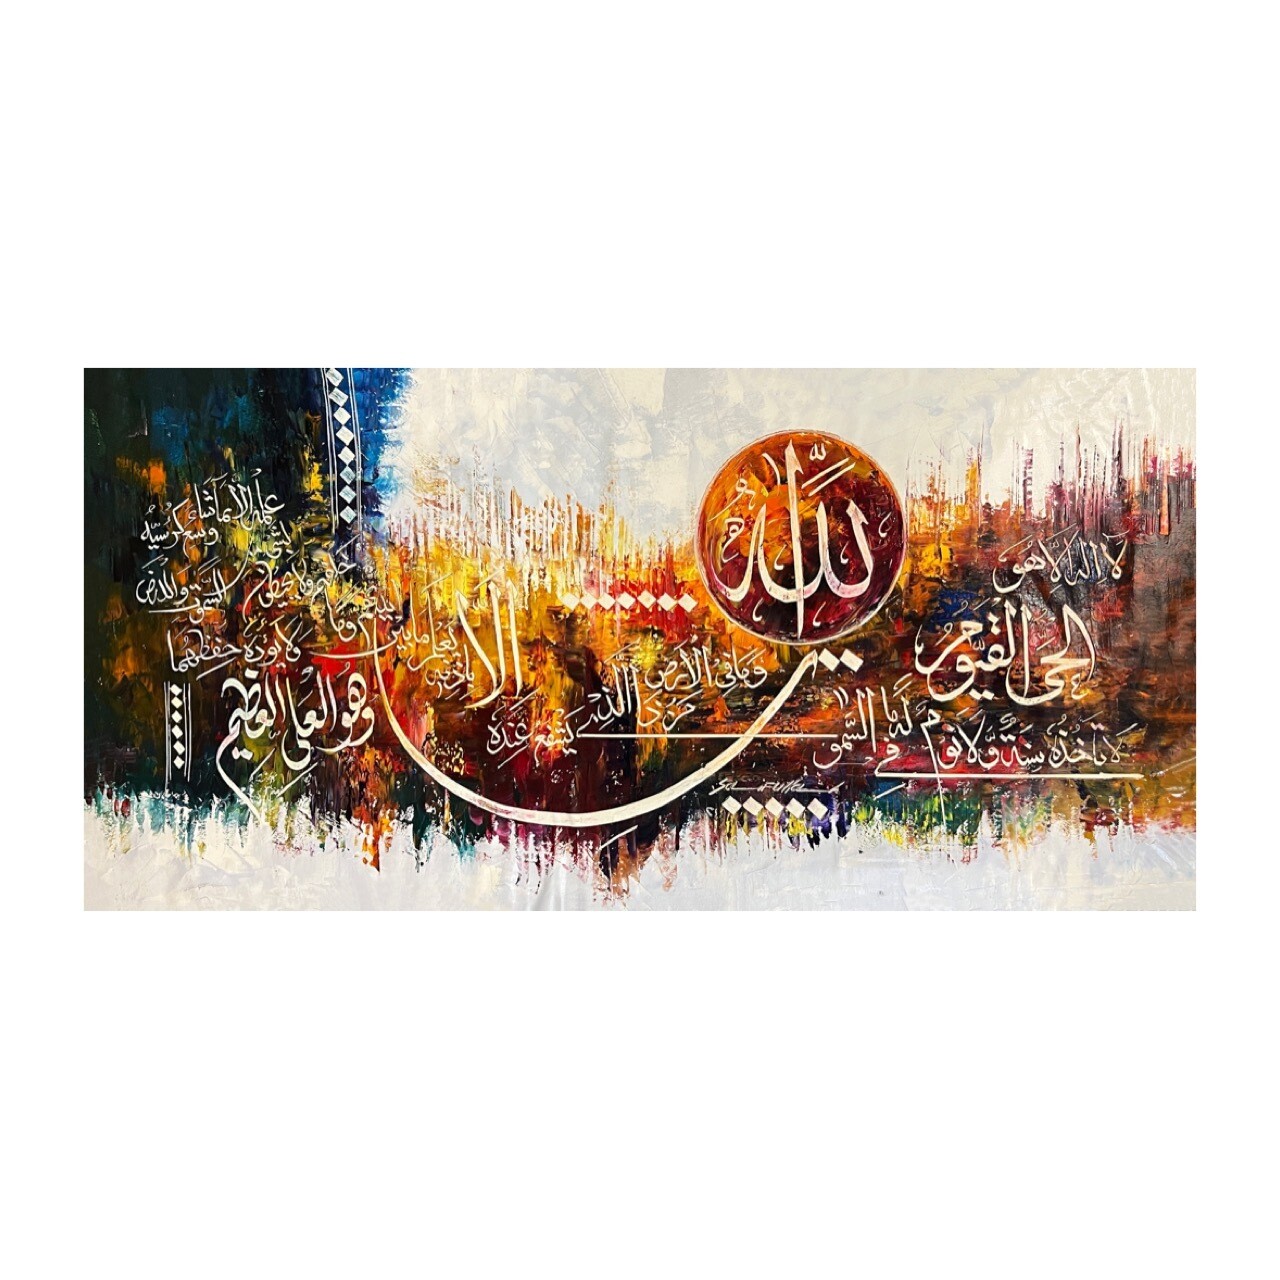 Ayatul Kursi - Original hand engraved knife calligraphy painting